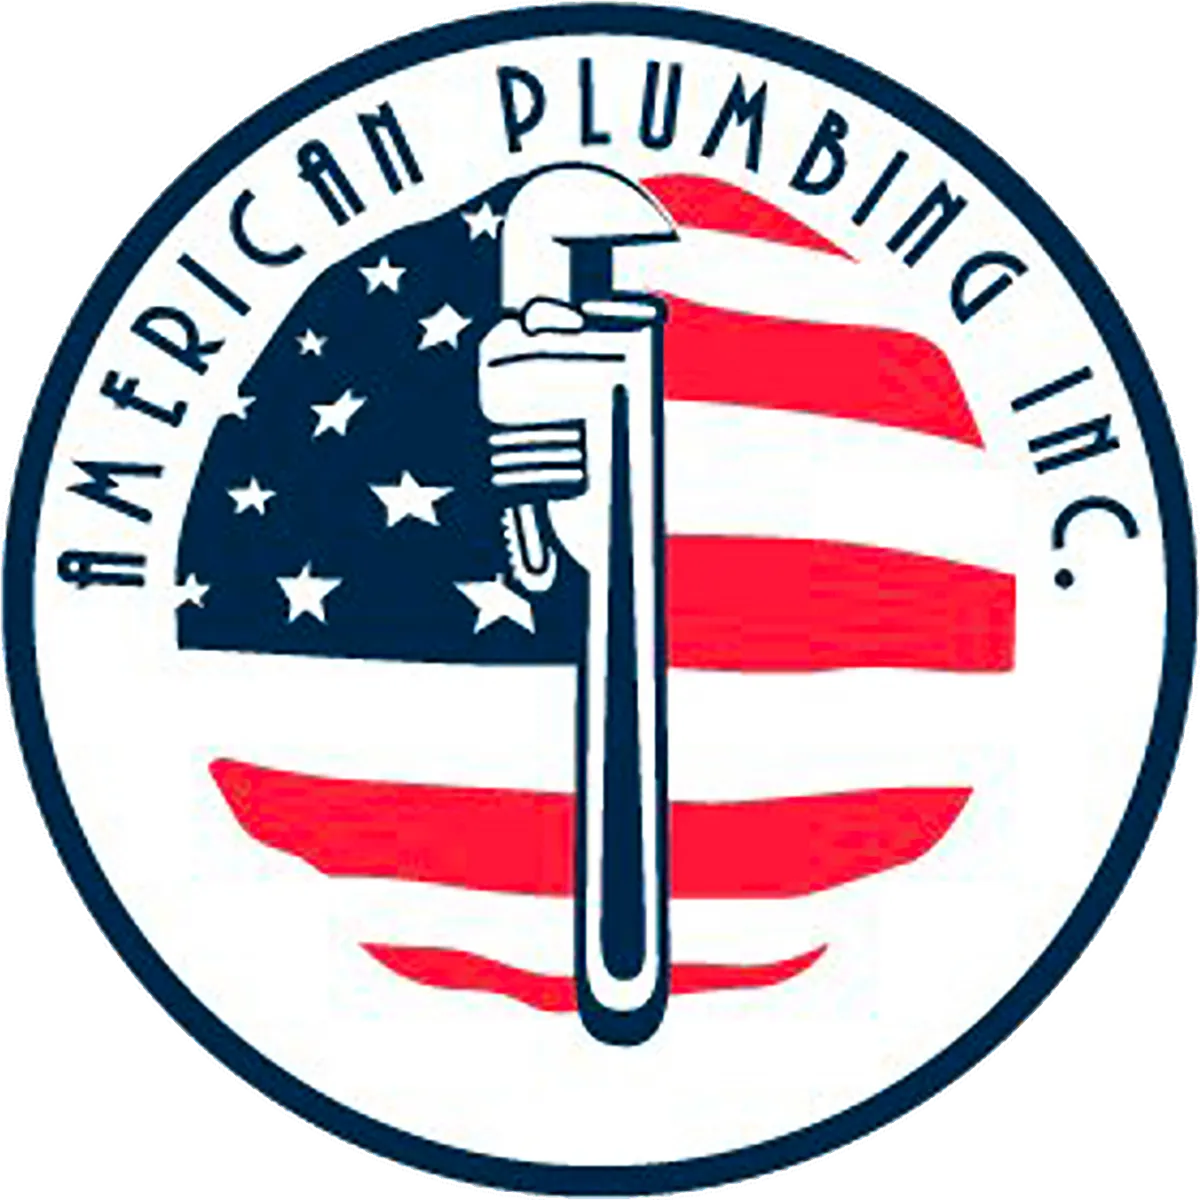 American Plumbing Inc., Plumber Burnsville MN, american plumbing near me